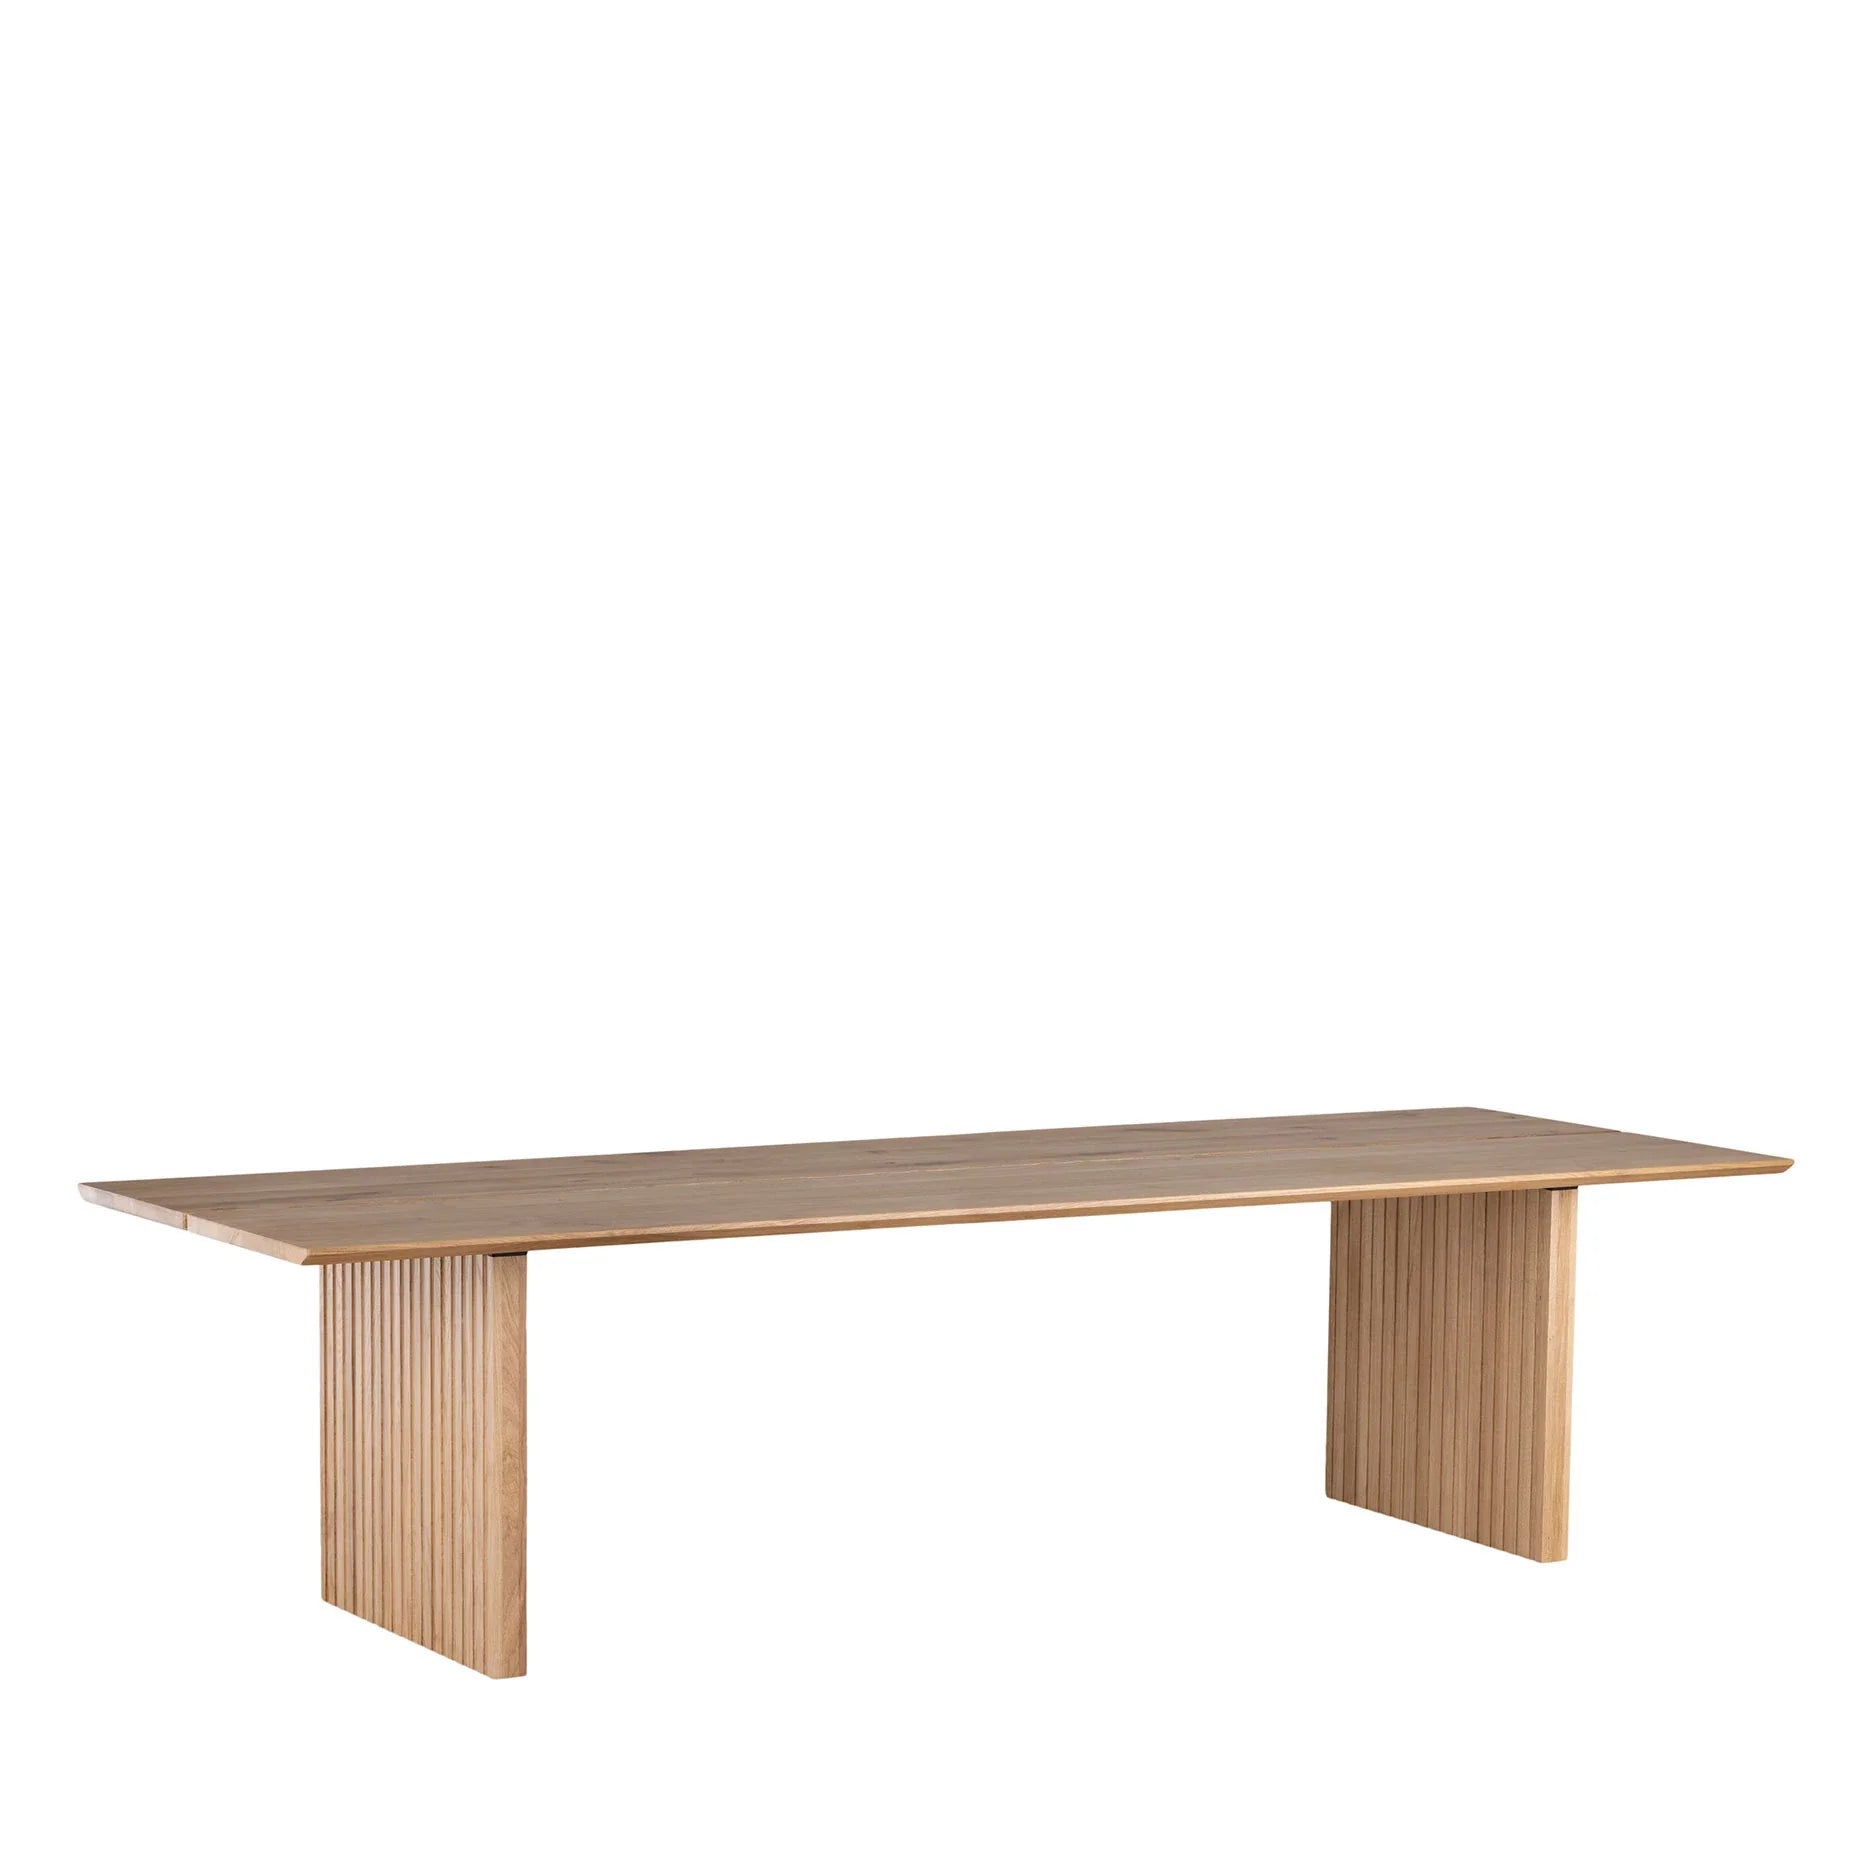 Vertigo Tisch II 300 cm - 300 cm - Natur - Furniture by Sinnerup von Furniture by Sinnerup